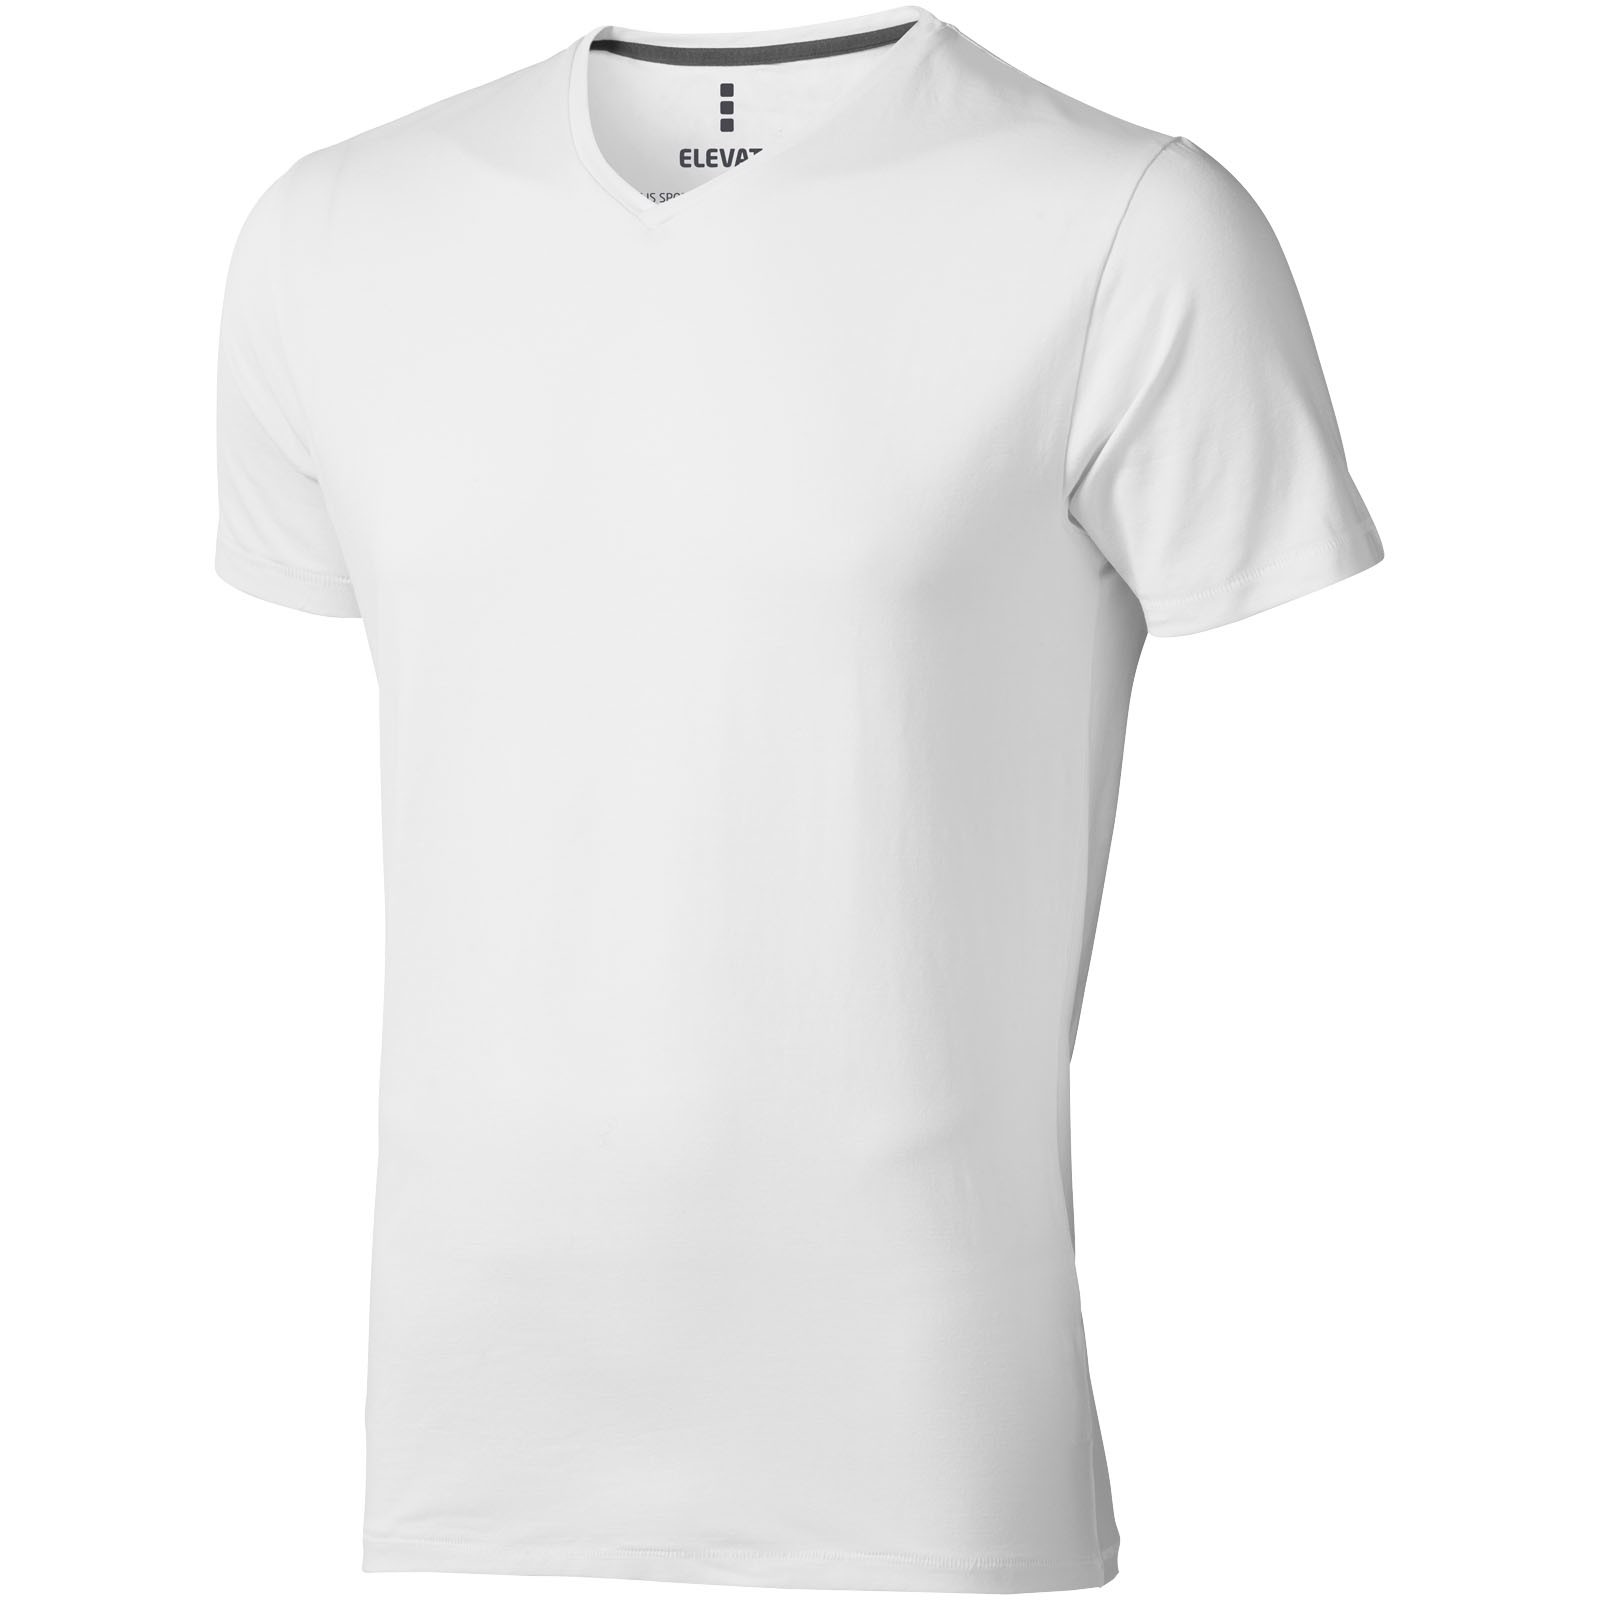 Kawartha short sleeve men's GOTS organic V-neck t-shirt - White / S